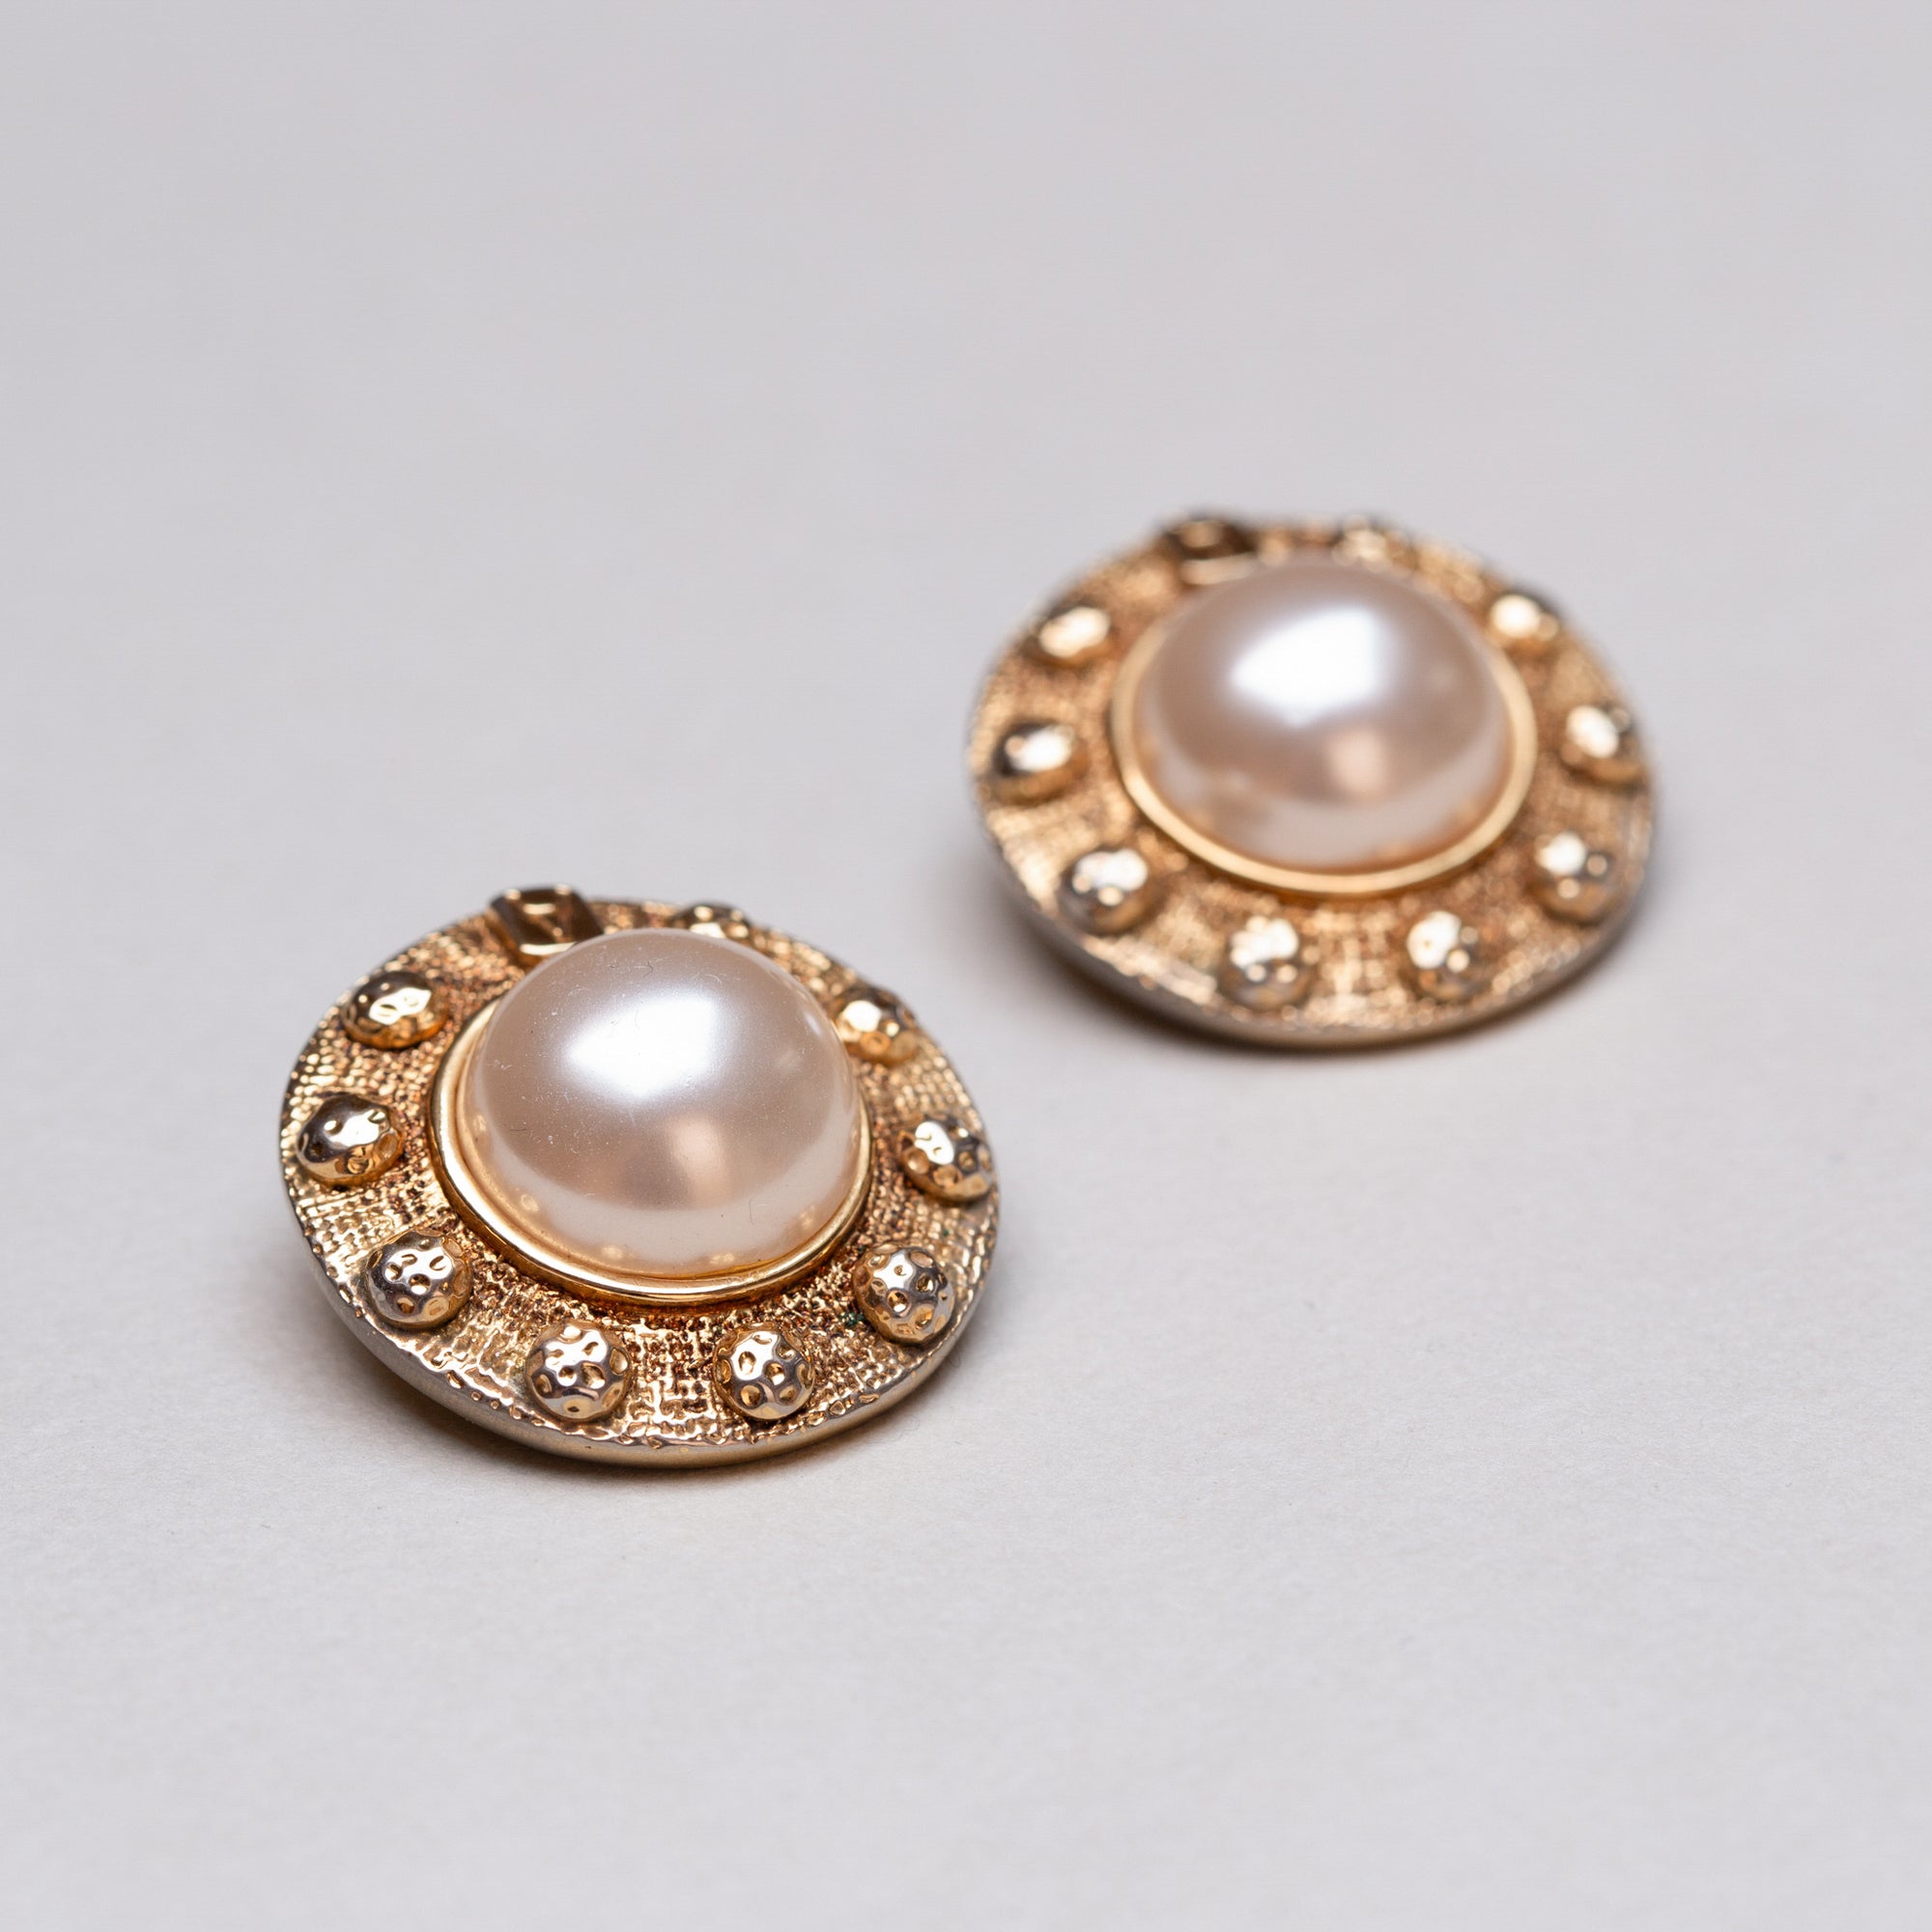 Vintage Alexandre de Paris Gold Clip-on Earrings with Pearl